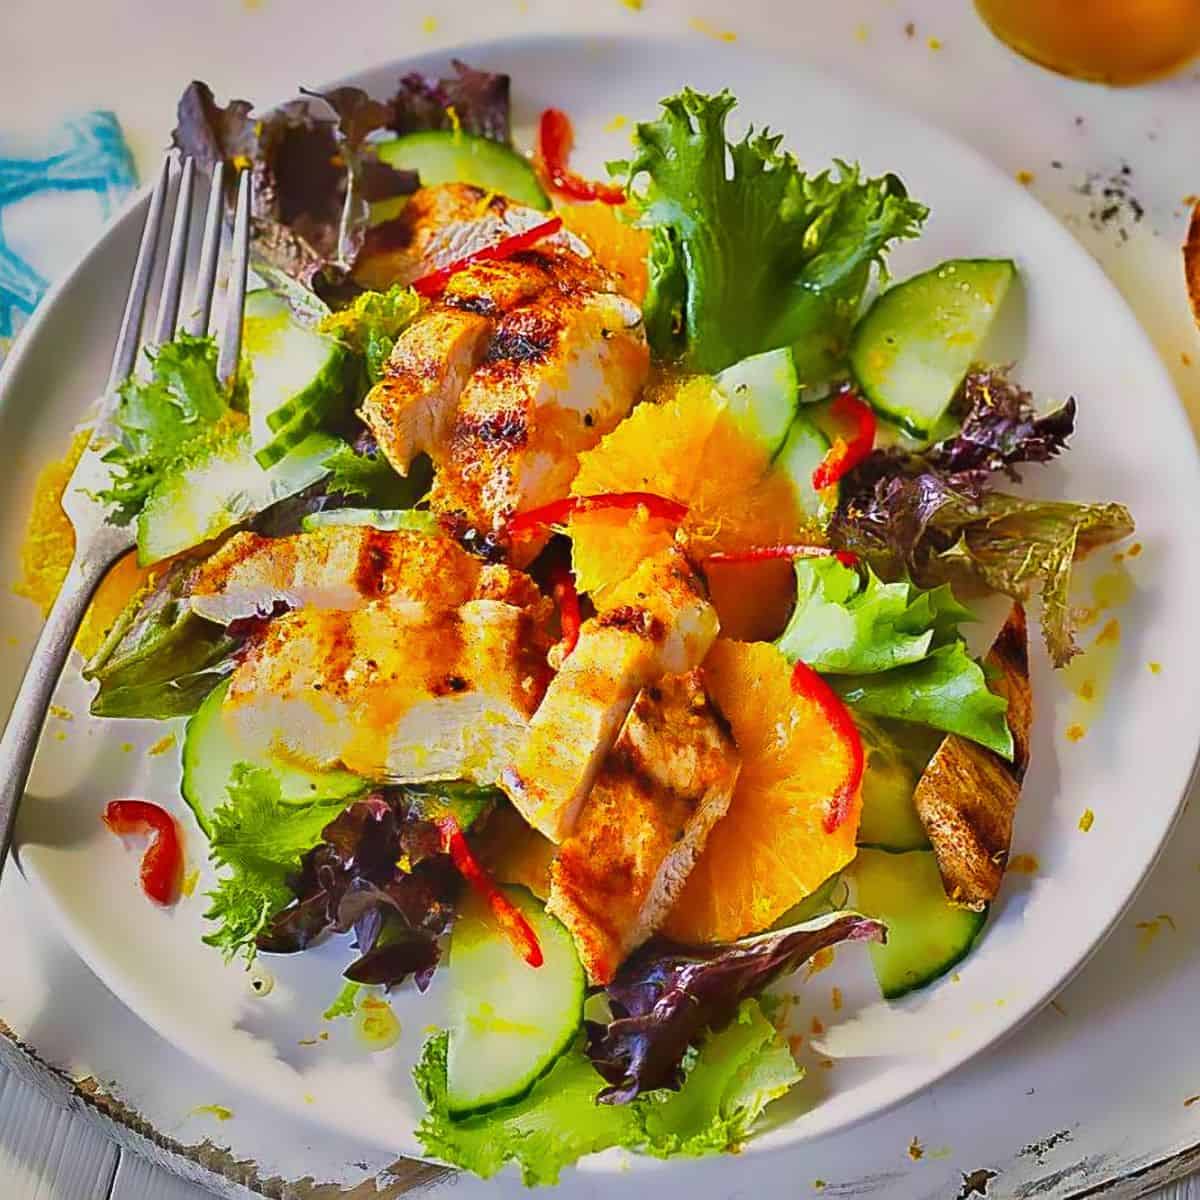 12. Spanish Chicken and Orange Salad Recipe - Spanish dish with chicken